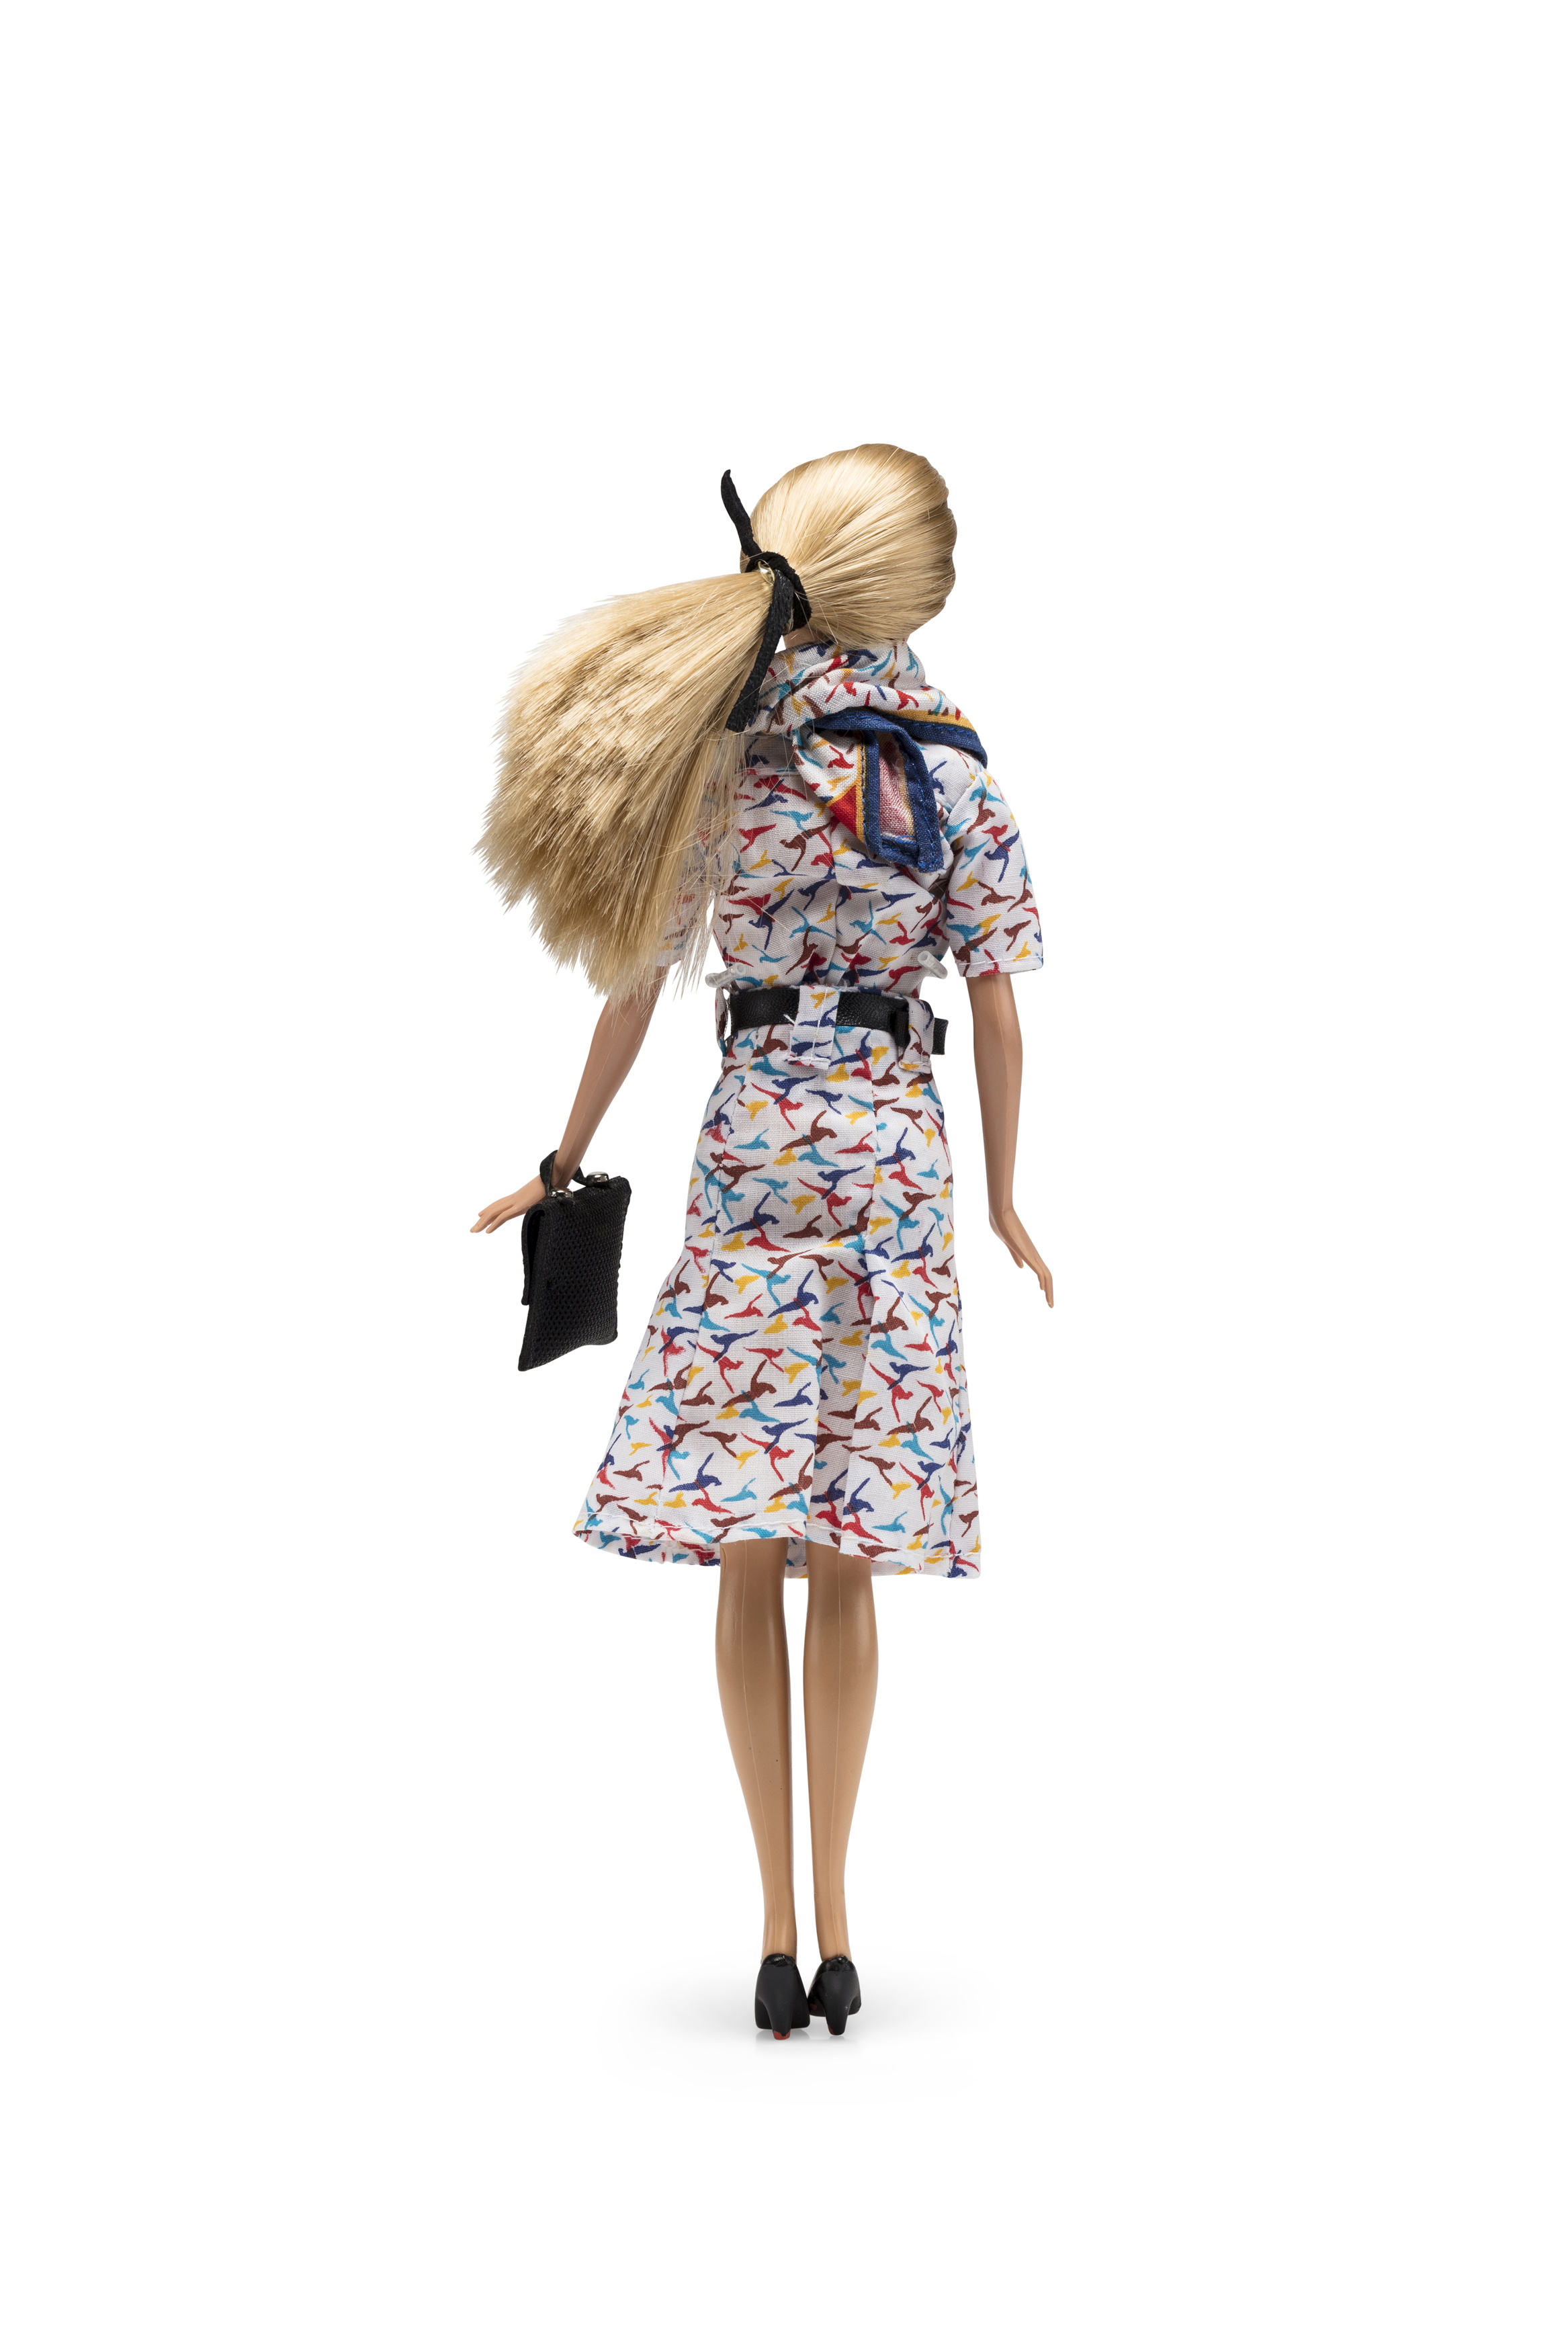 Barbie doll wearing Qantas flight attendant uniform from 1987-1994